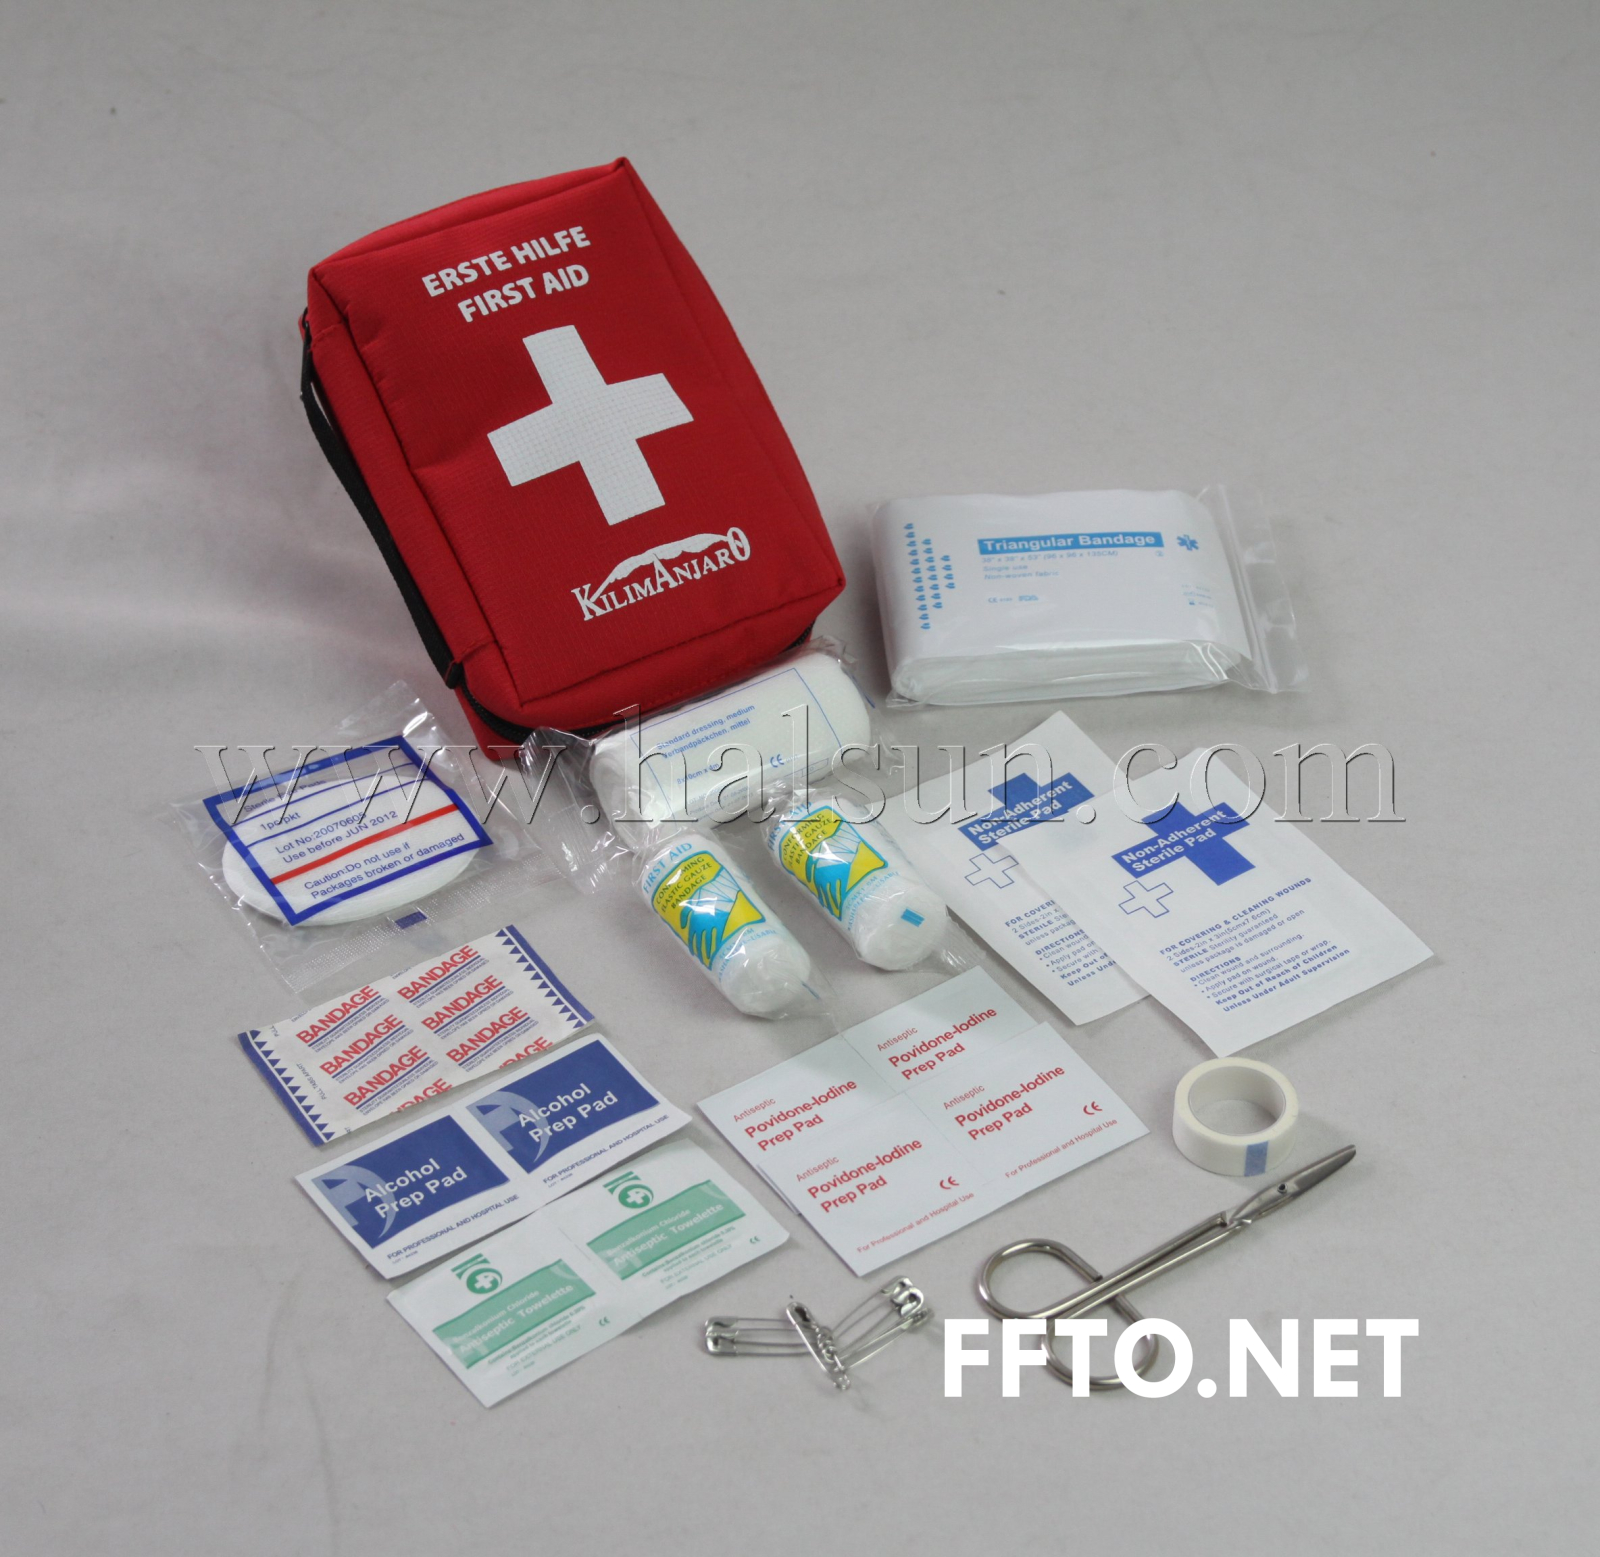 First Aid Kits,HSFAK041